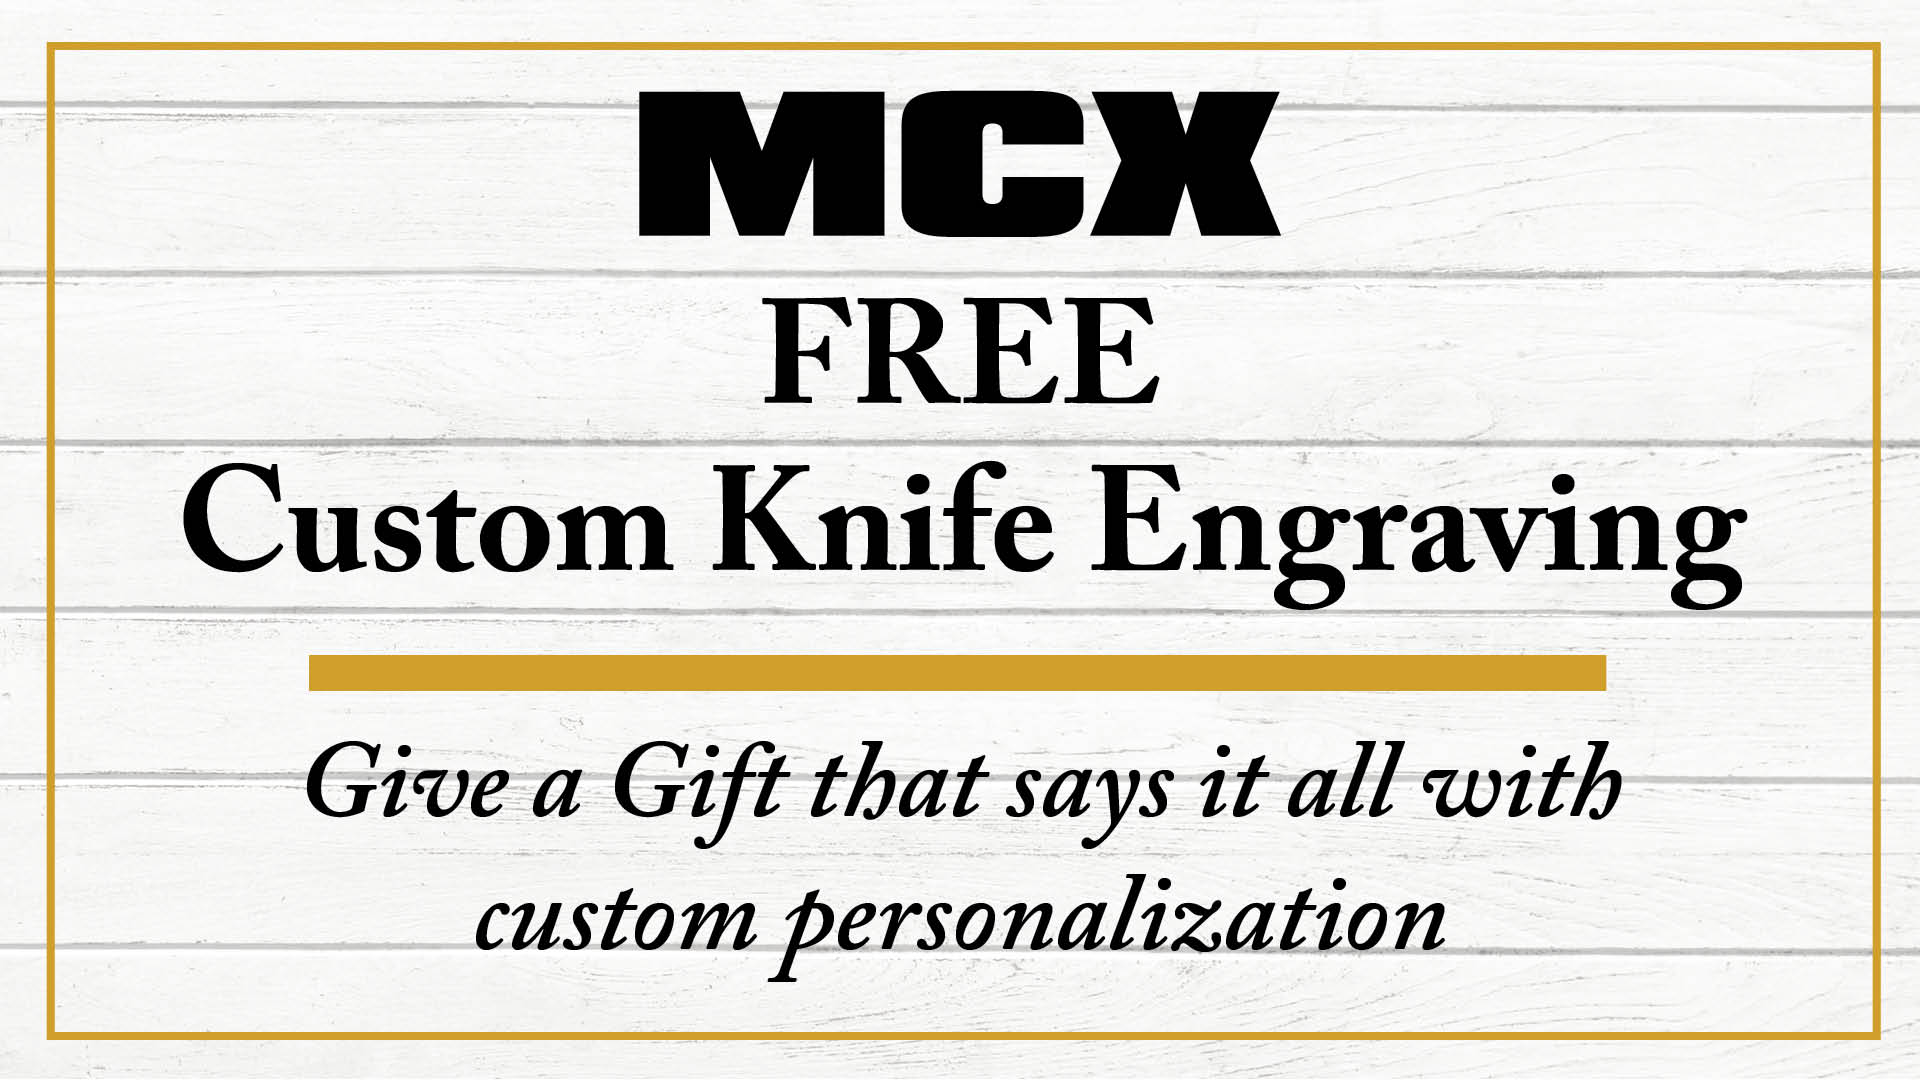 Custom Knife Engraving – FREE